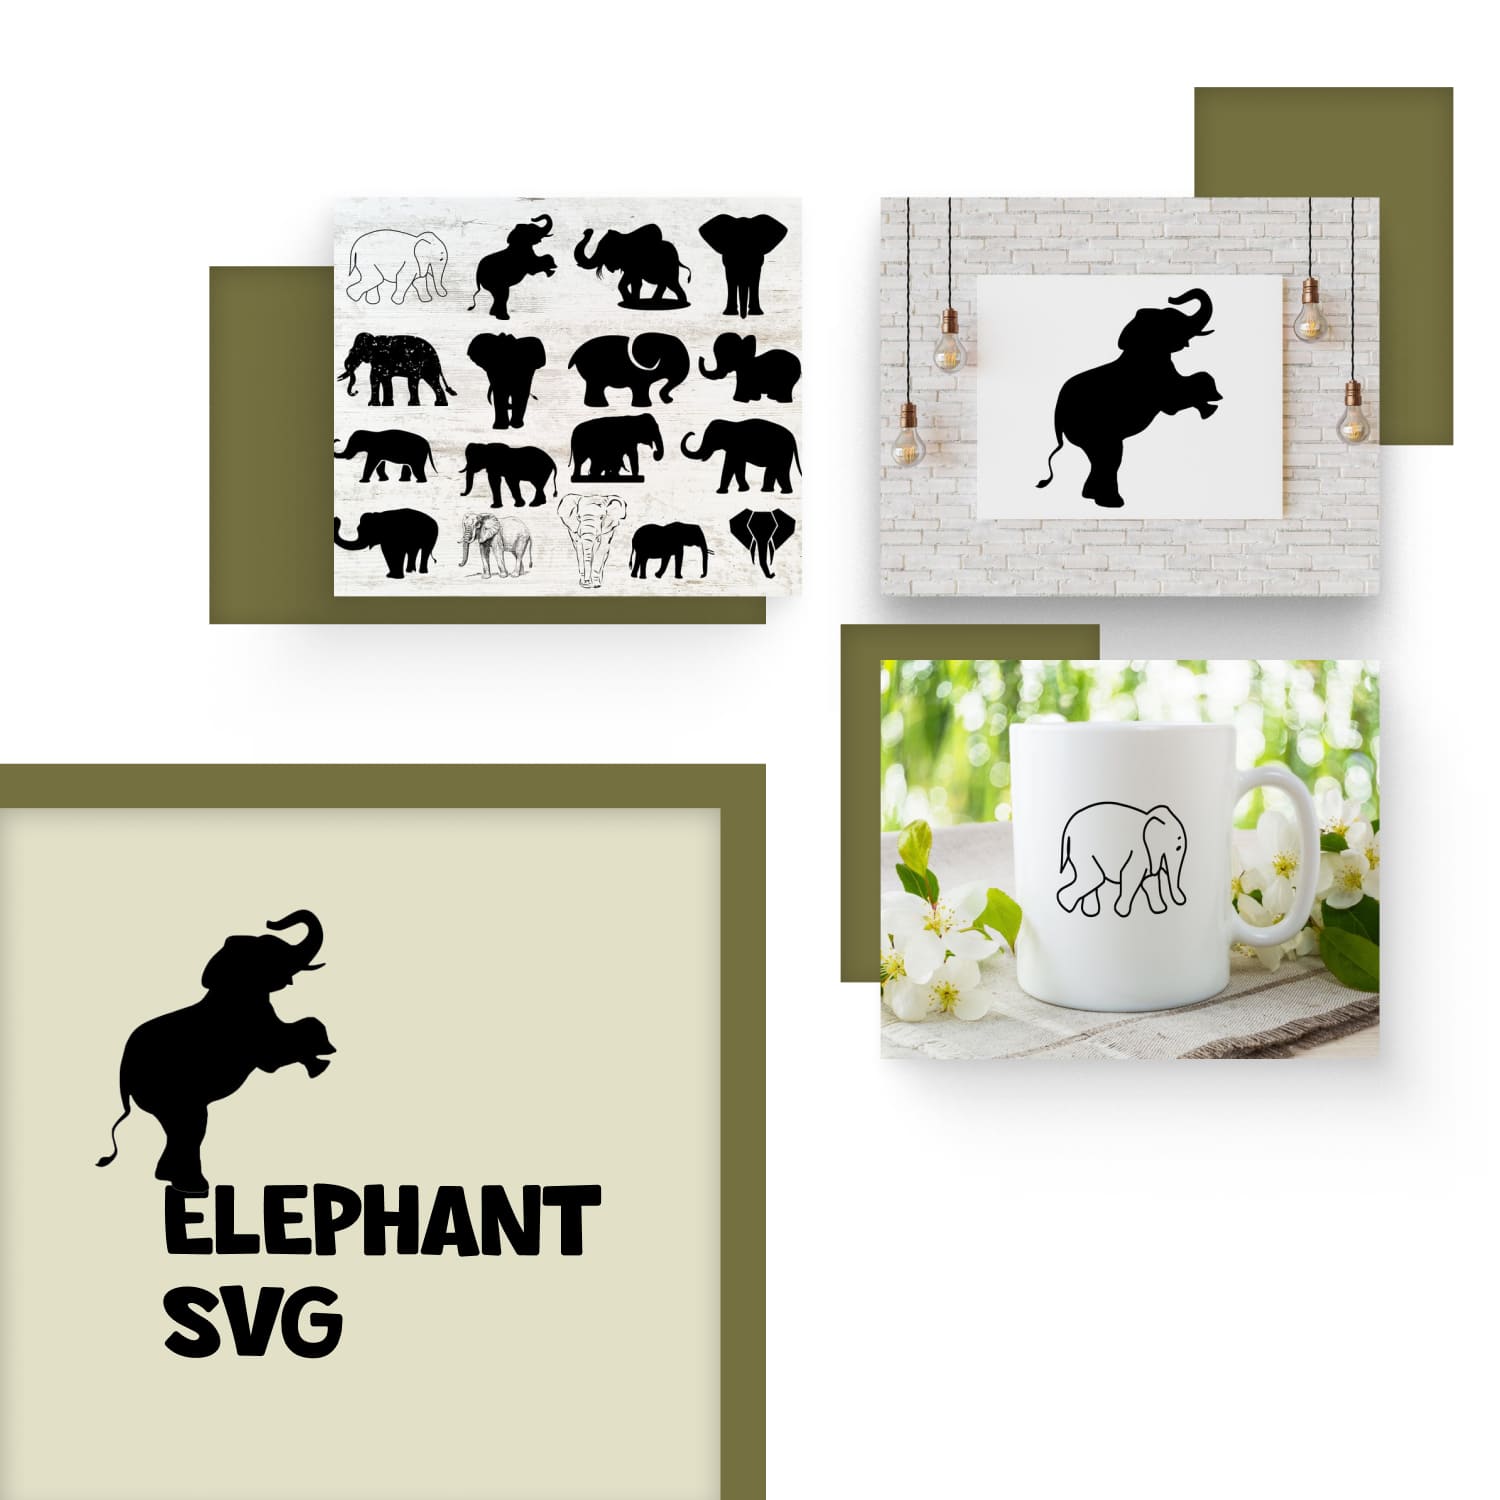 Elephant SVG Bundle main cover.